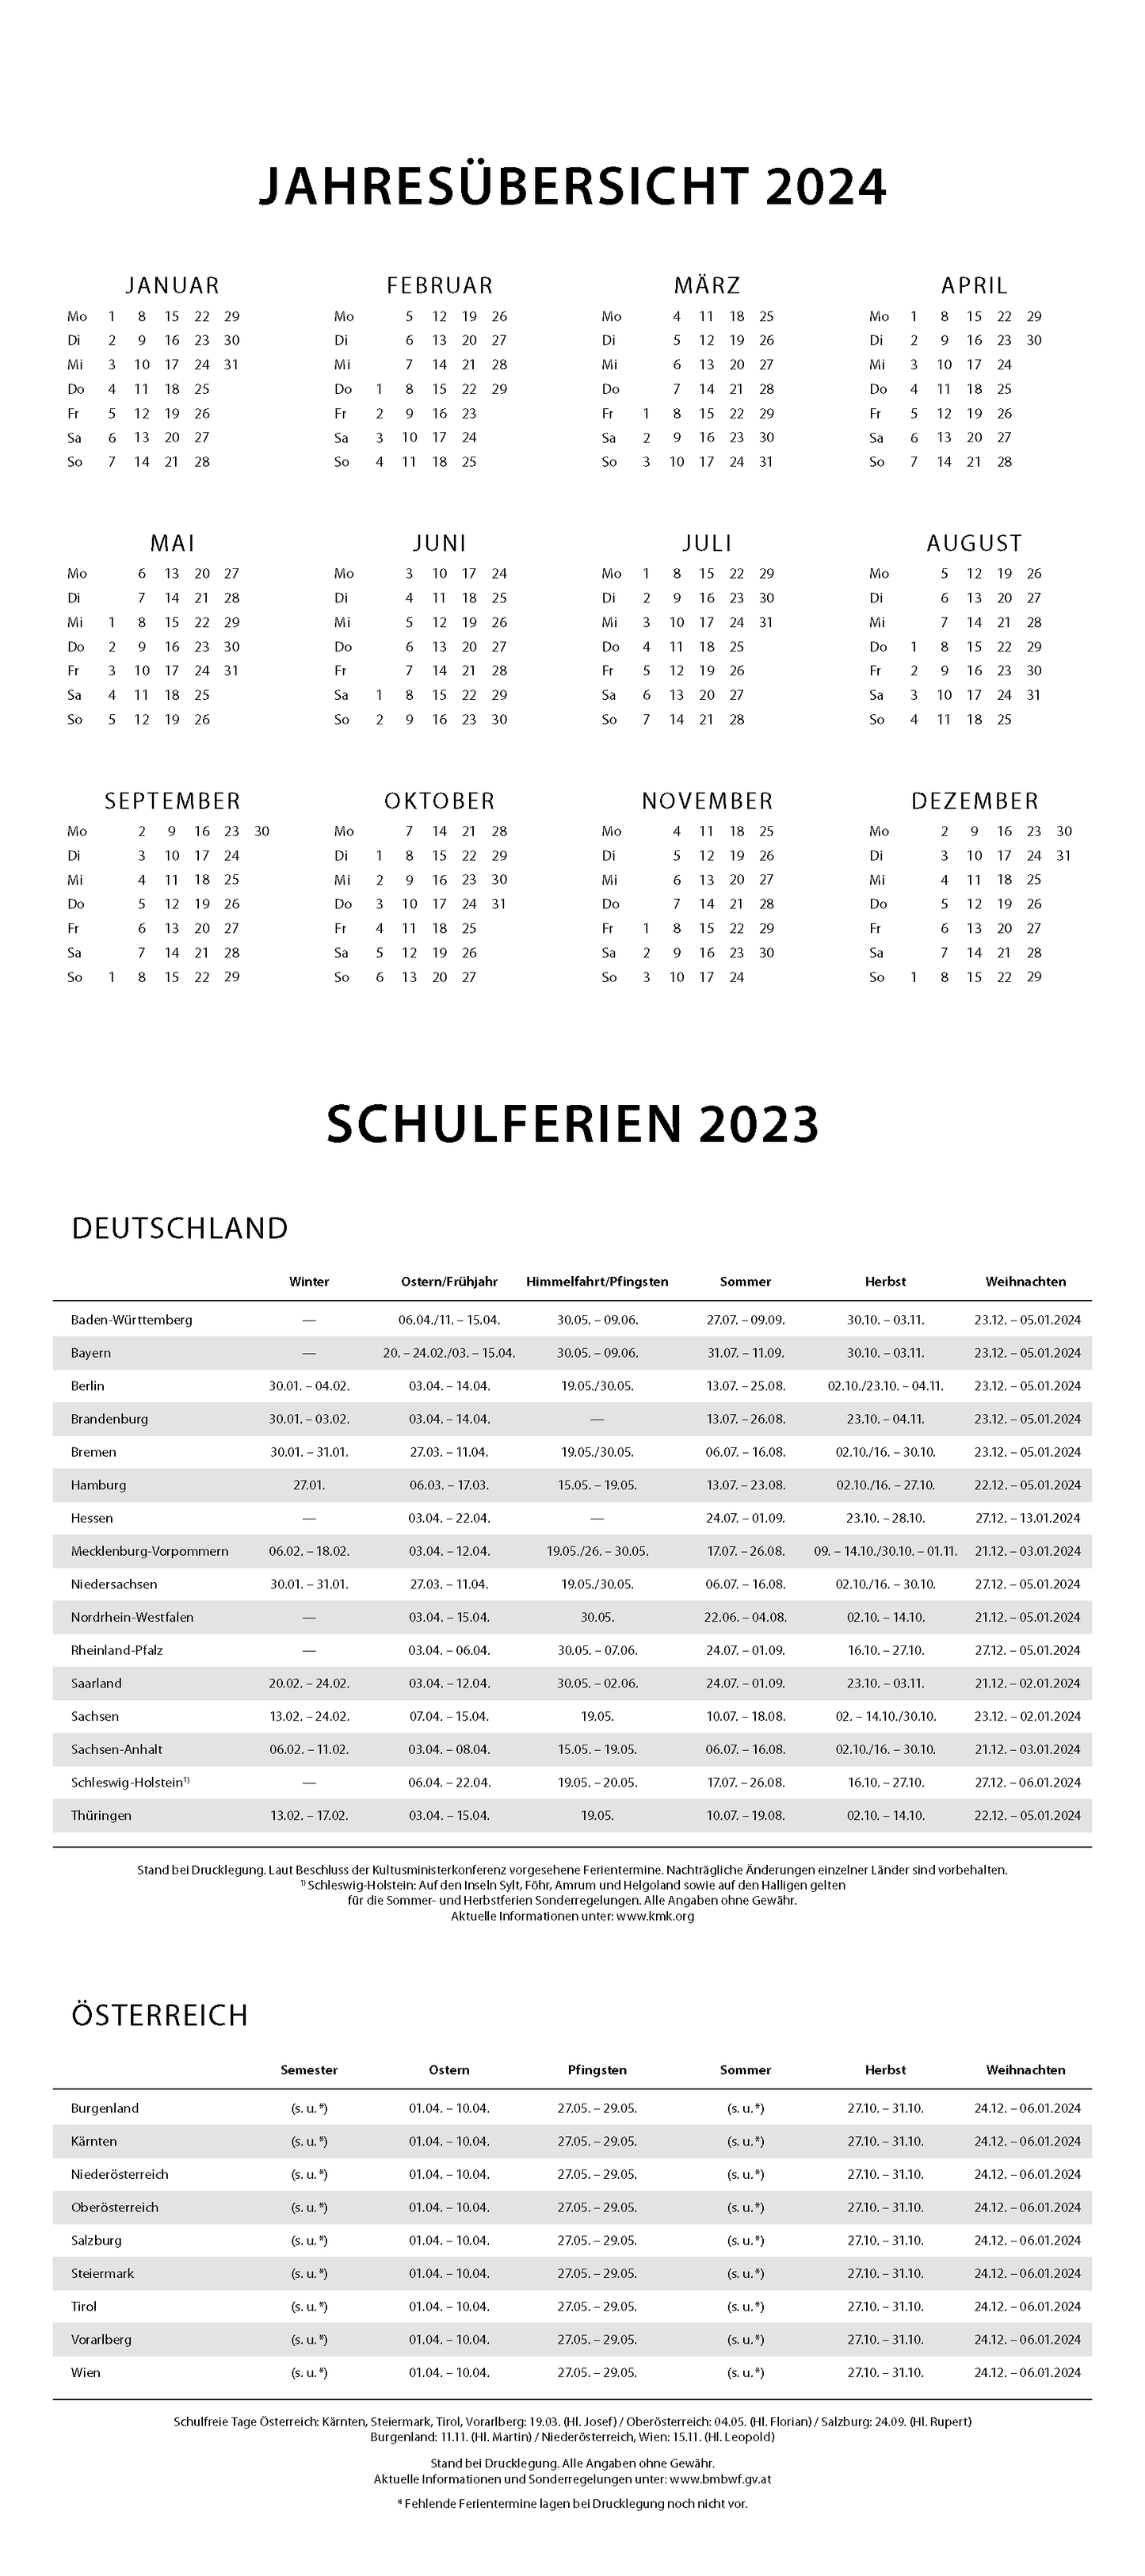 Notizkalender 2023